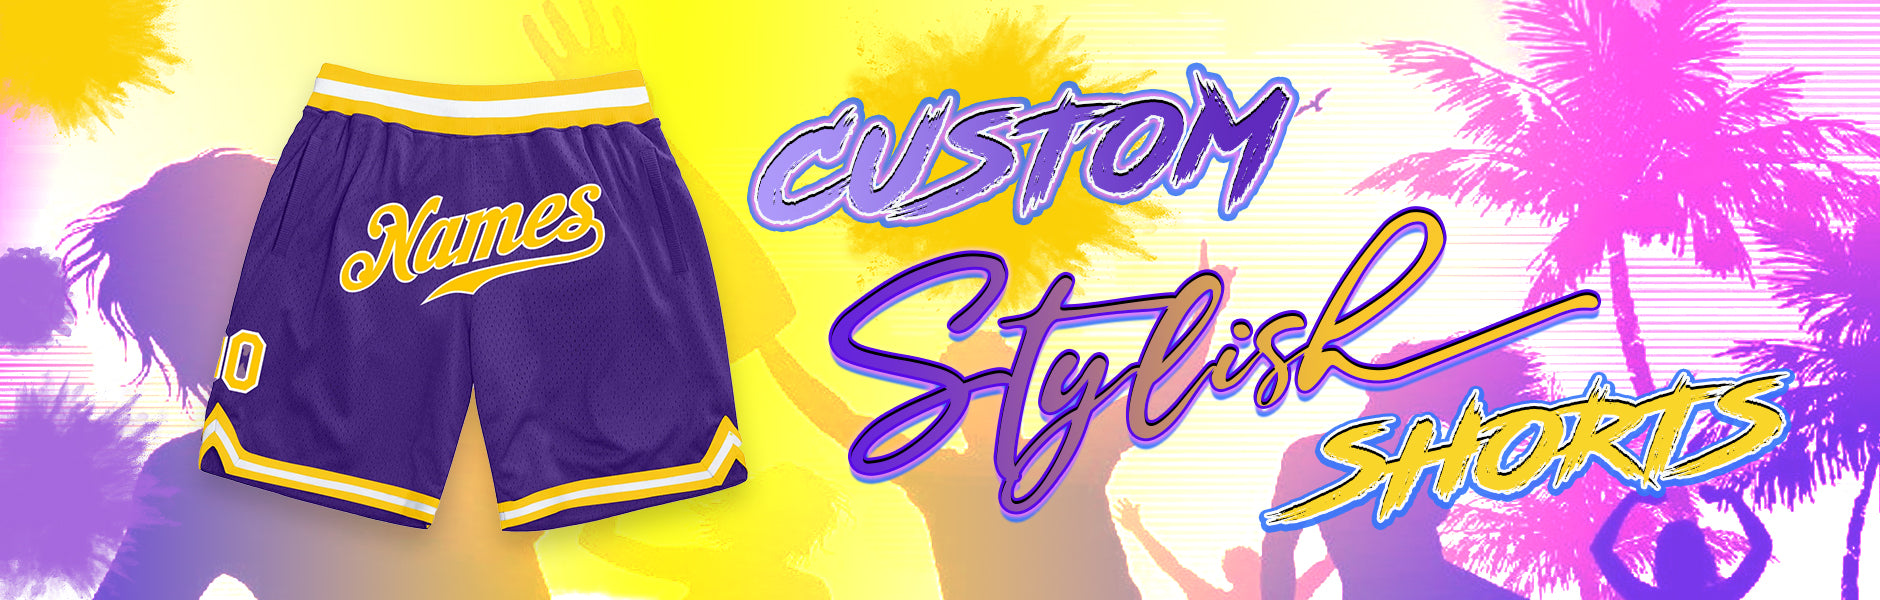 custom shorts purple jersey